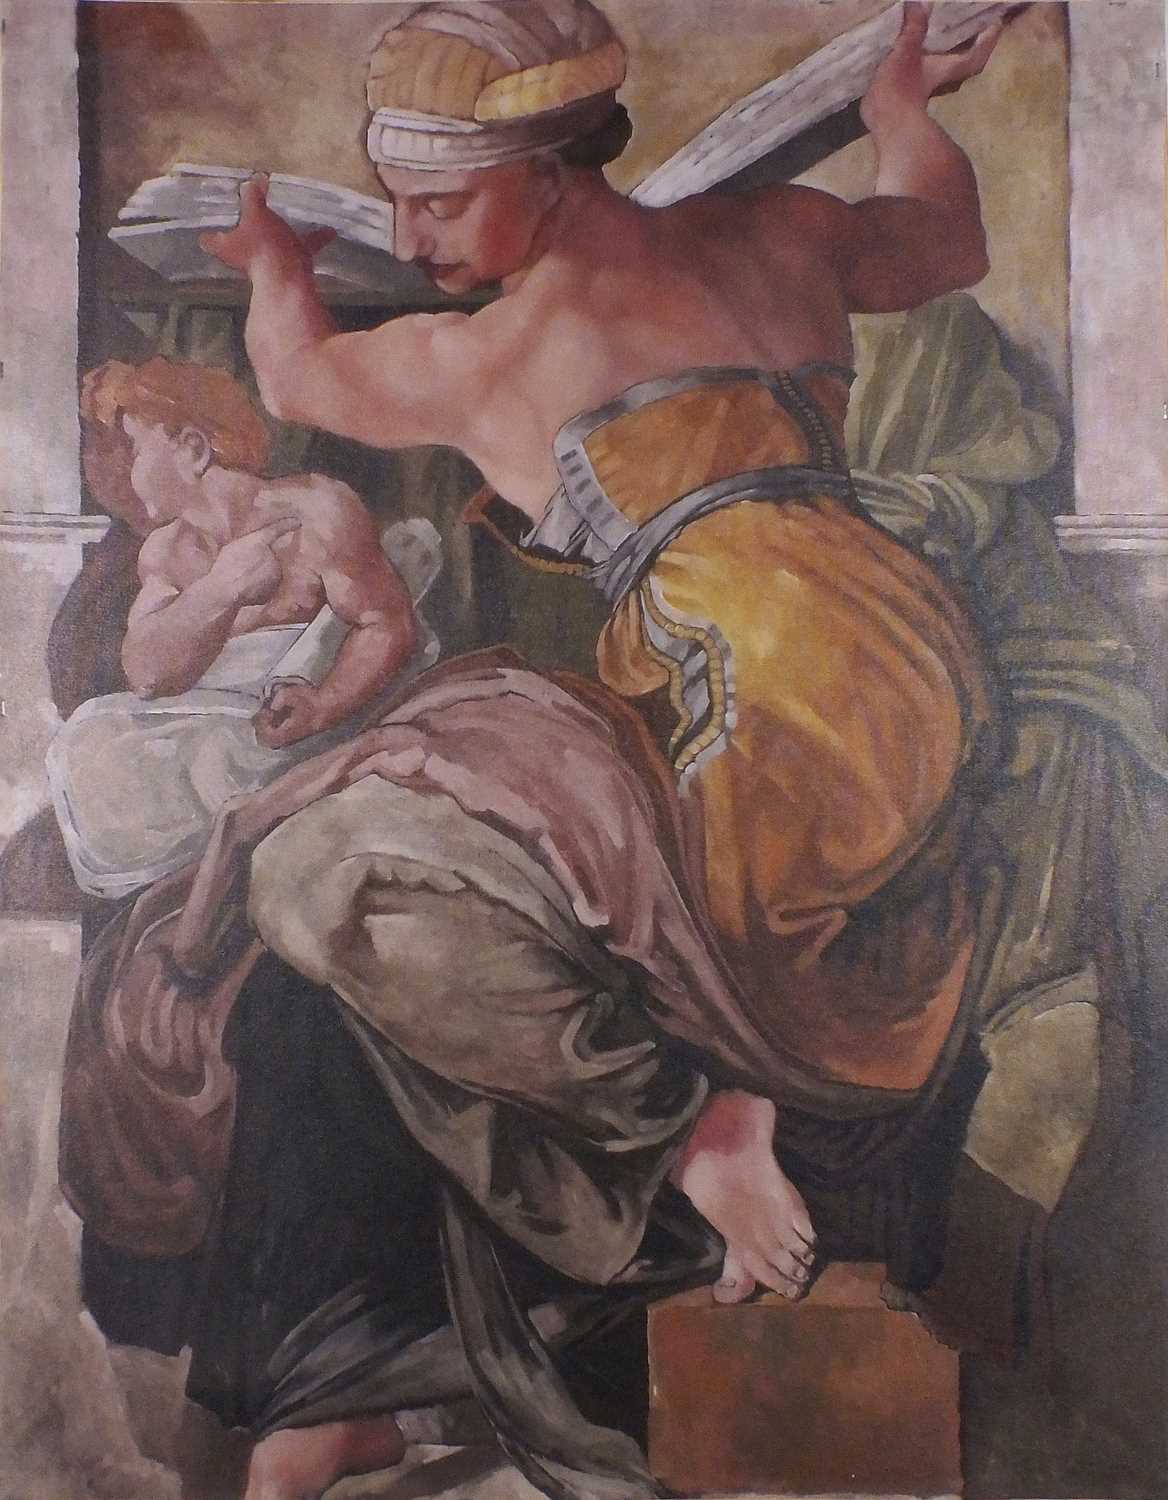 ƚ David GAINFORD (British b. 1941) Sybil (style of Michelangelo), Coloured print on canvas, 35.75" x